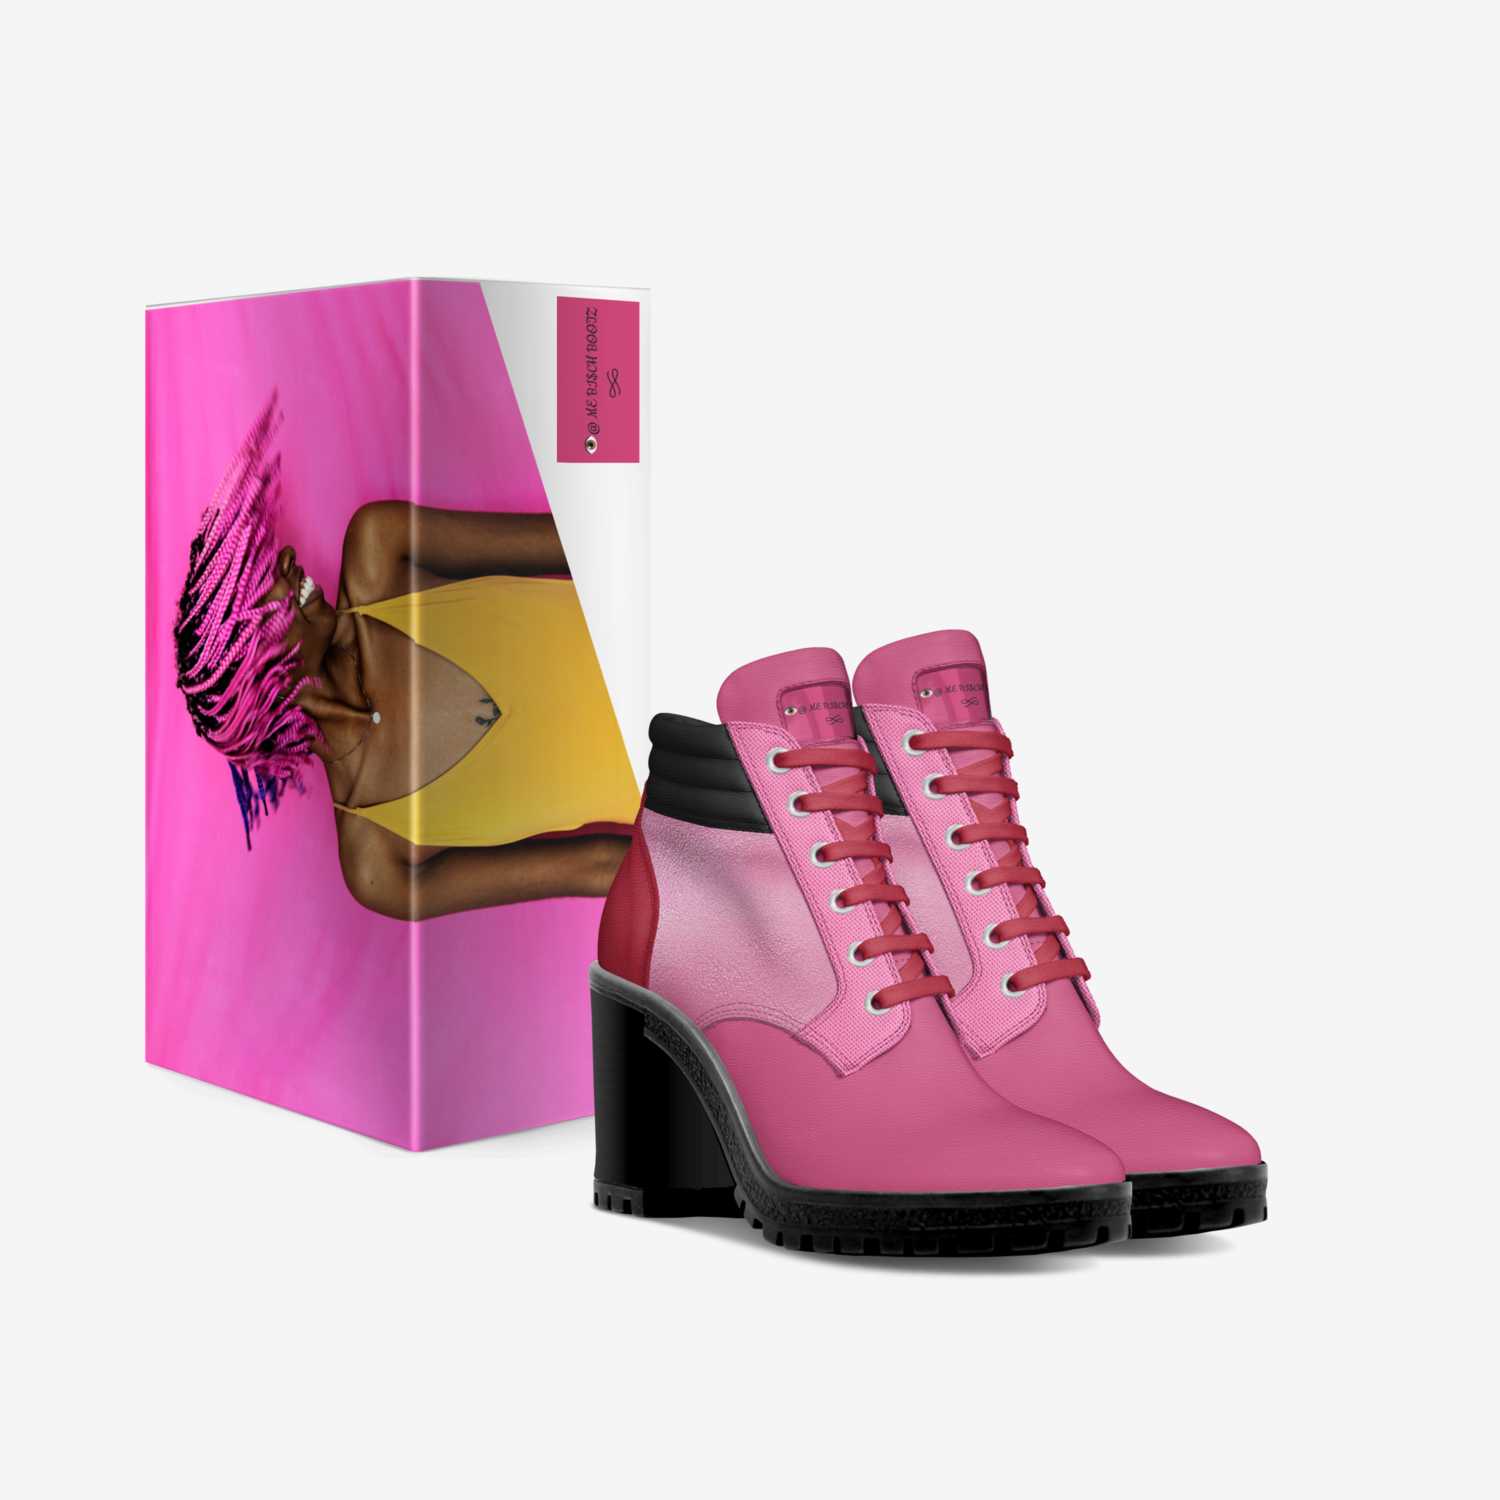 👁@ ME BI$CH BOOTZ custom made in Italy shoes by Ciara Shepard | Box view